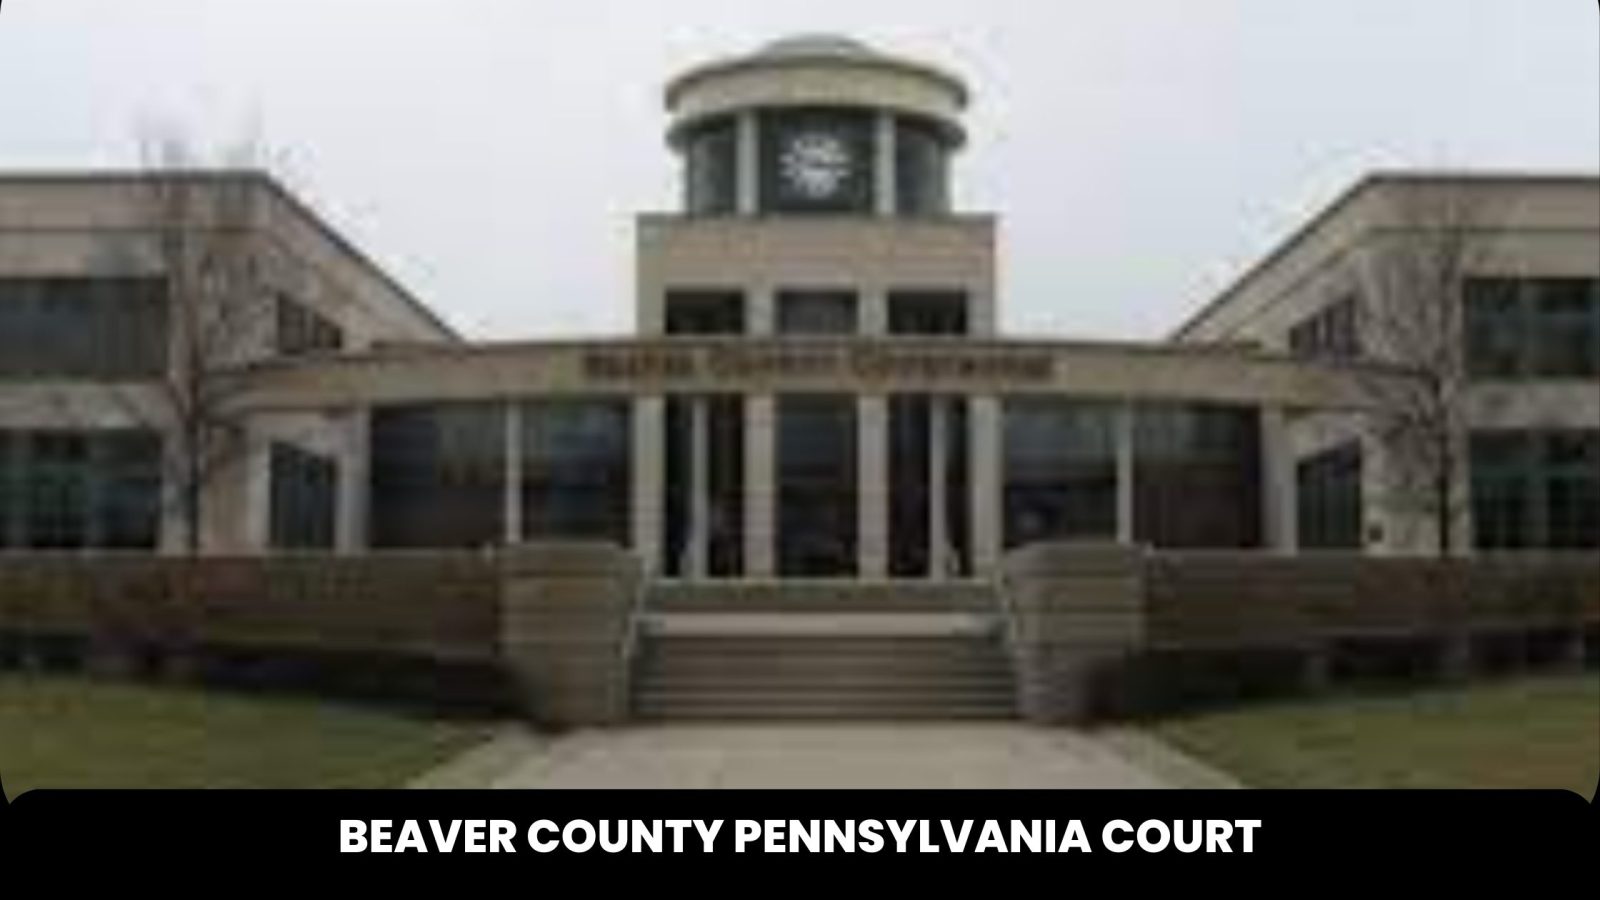 Beaver County Pennsylvania Court